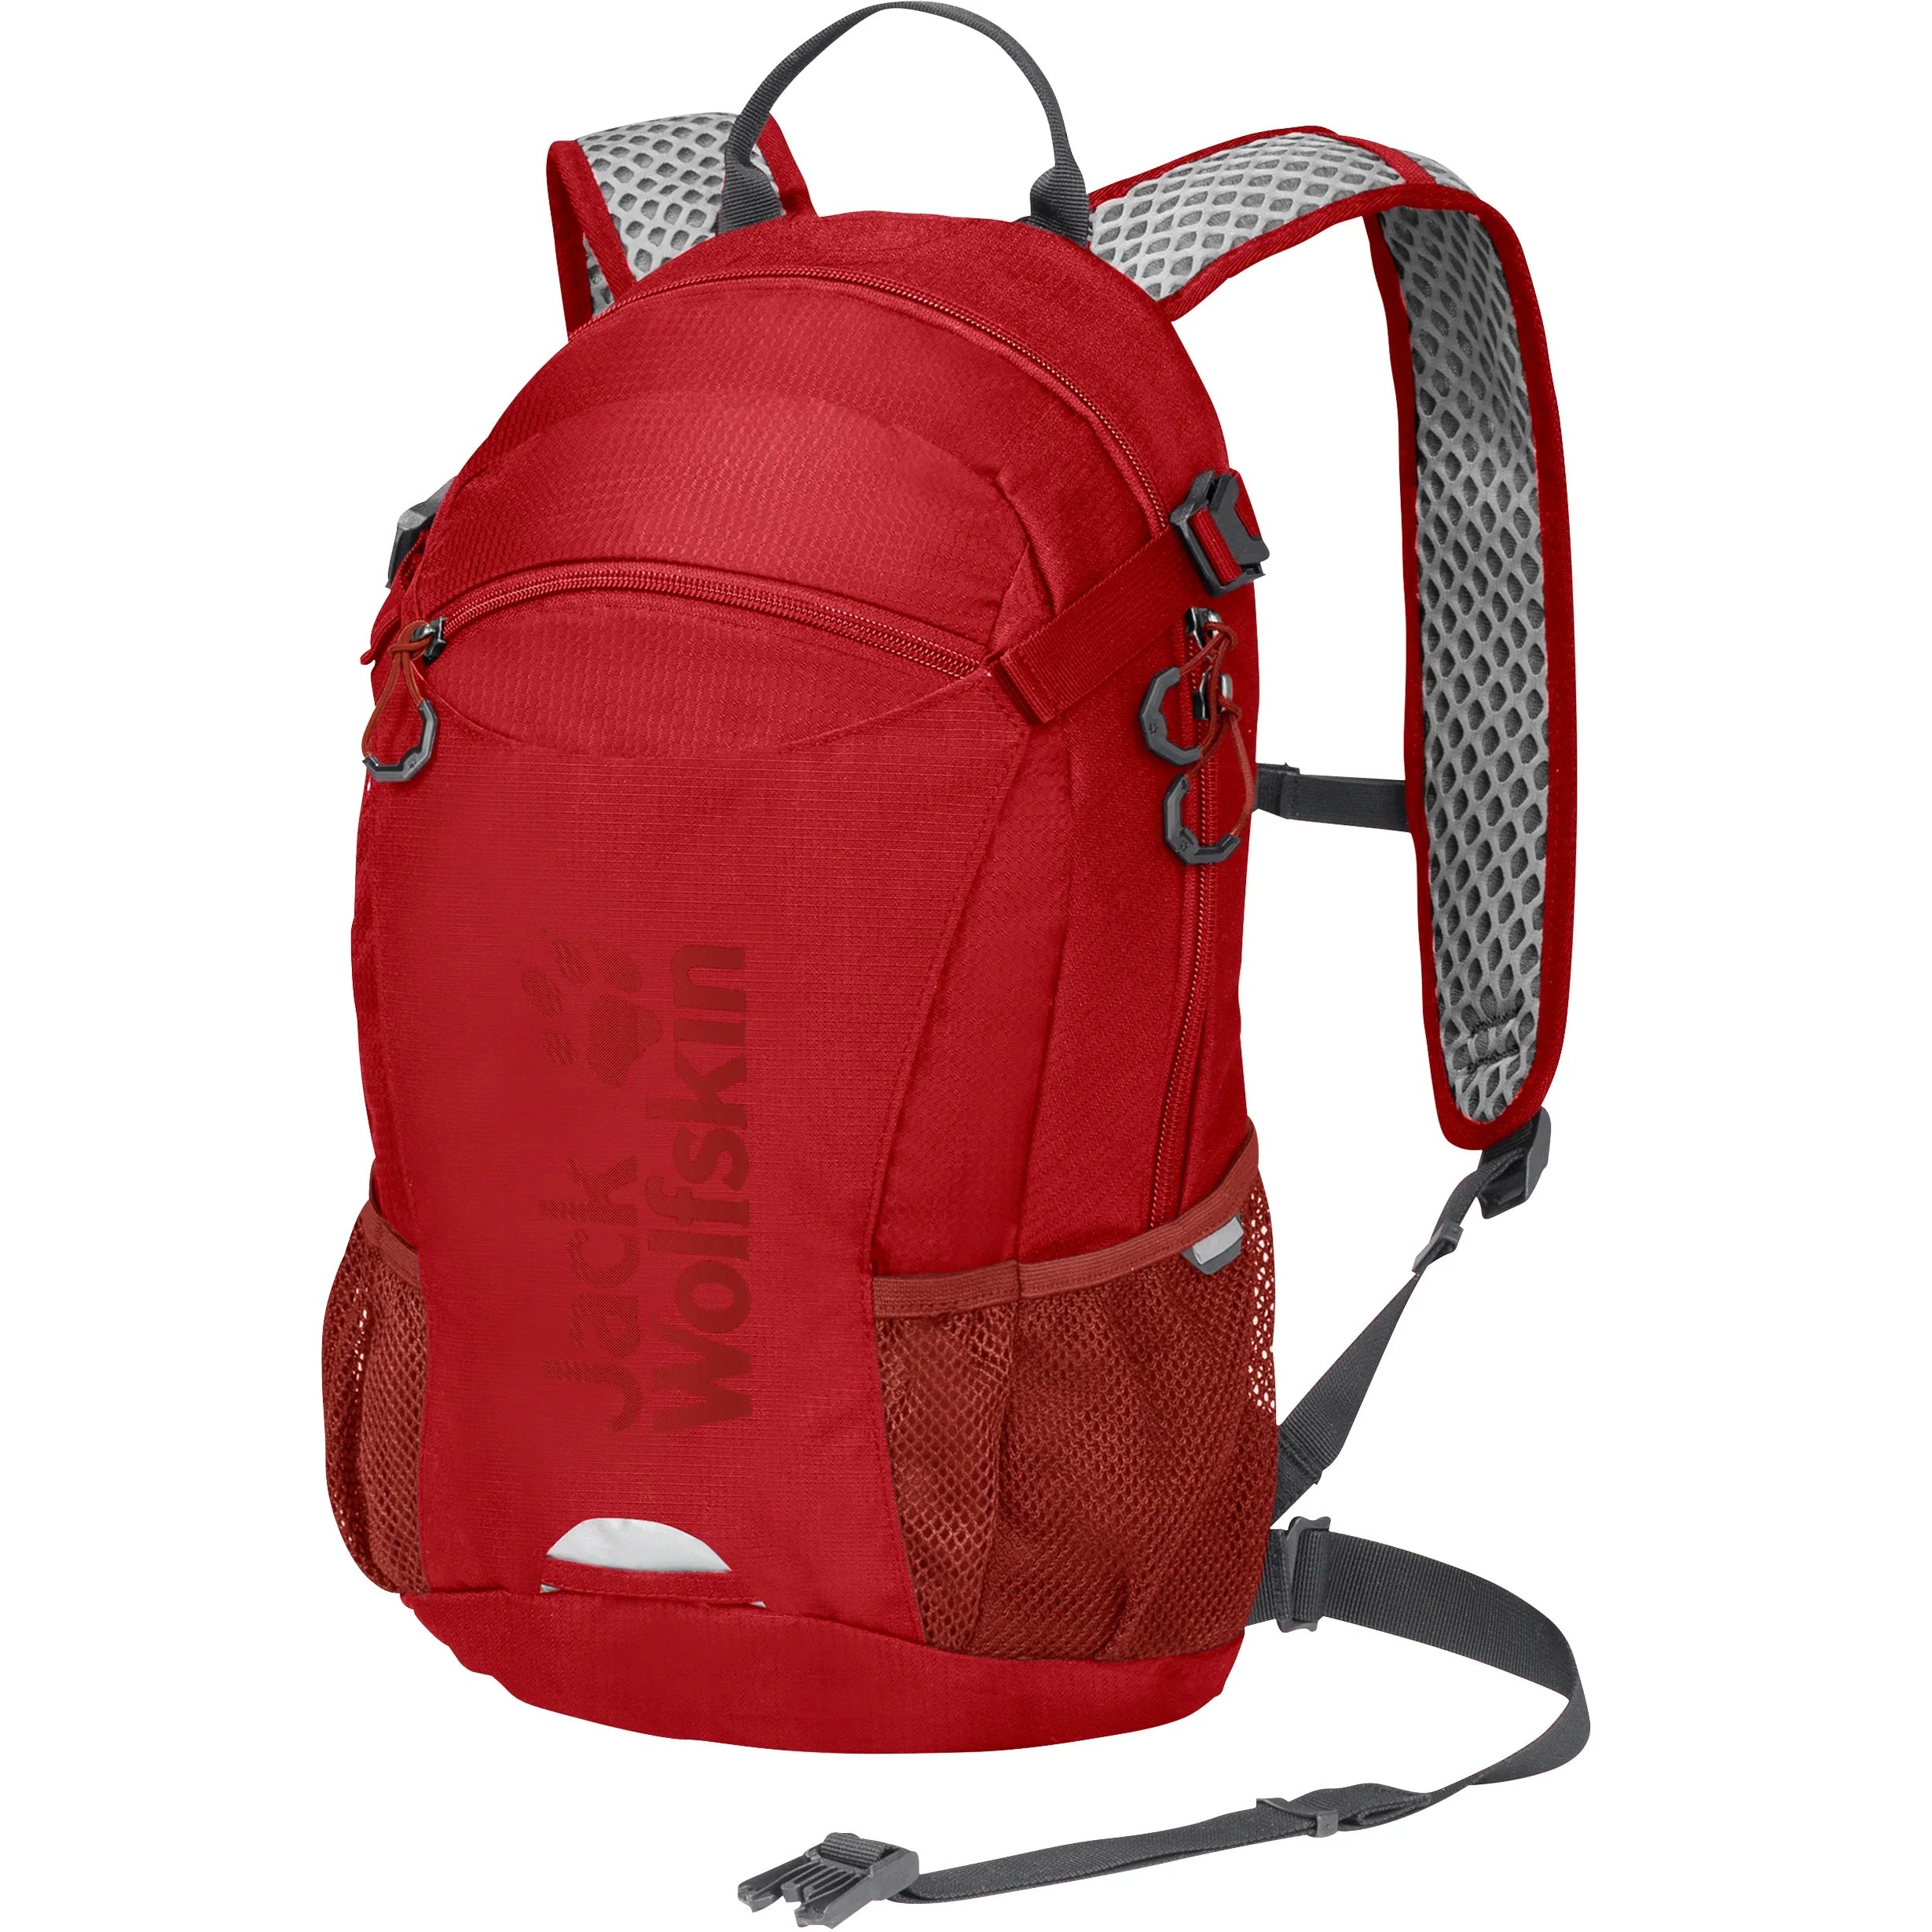 Jack Wolfskin Daypacks & Bags Velocity 12 bike backpack 44 cm - Adrenaline Red